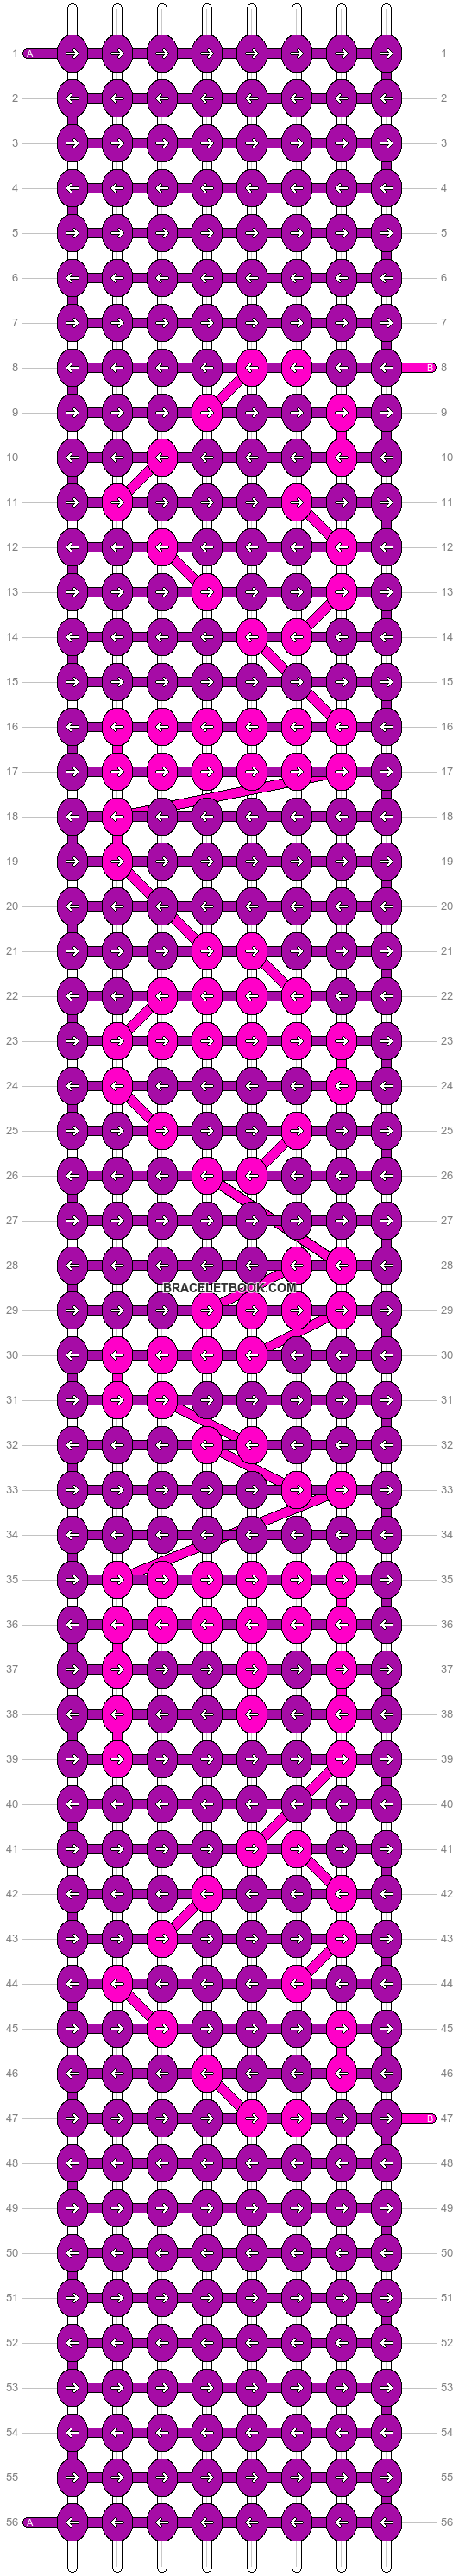 Alpha pattern #1260 variation #89055 pattern